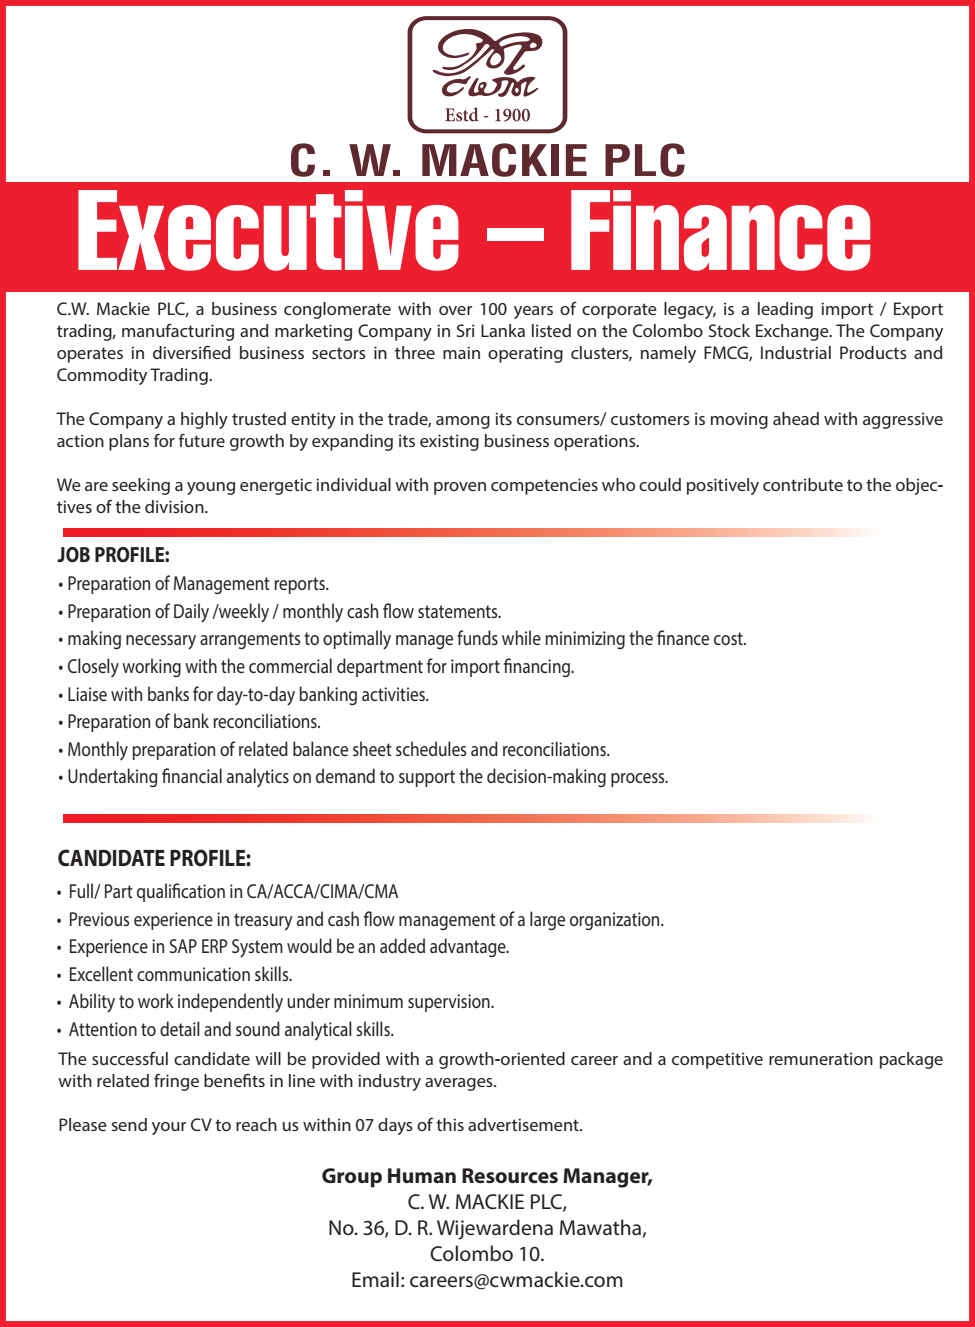 Executive - Finance